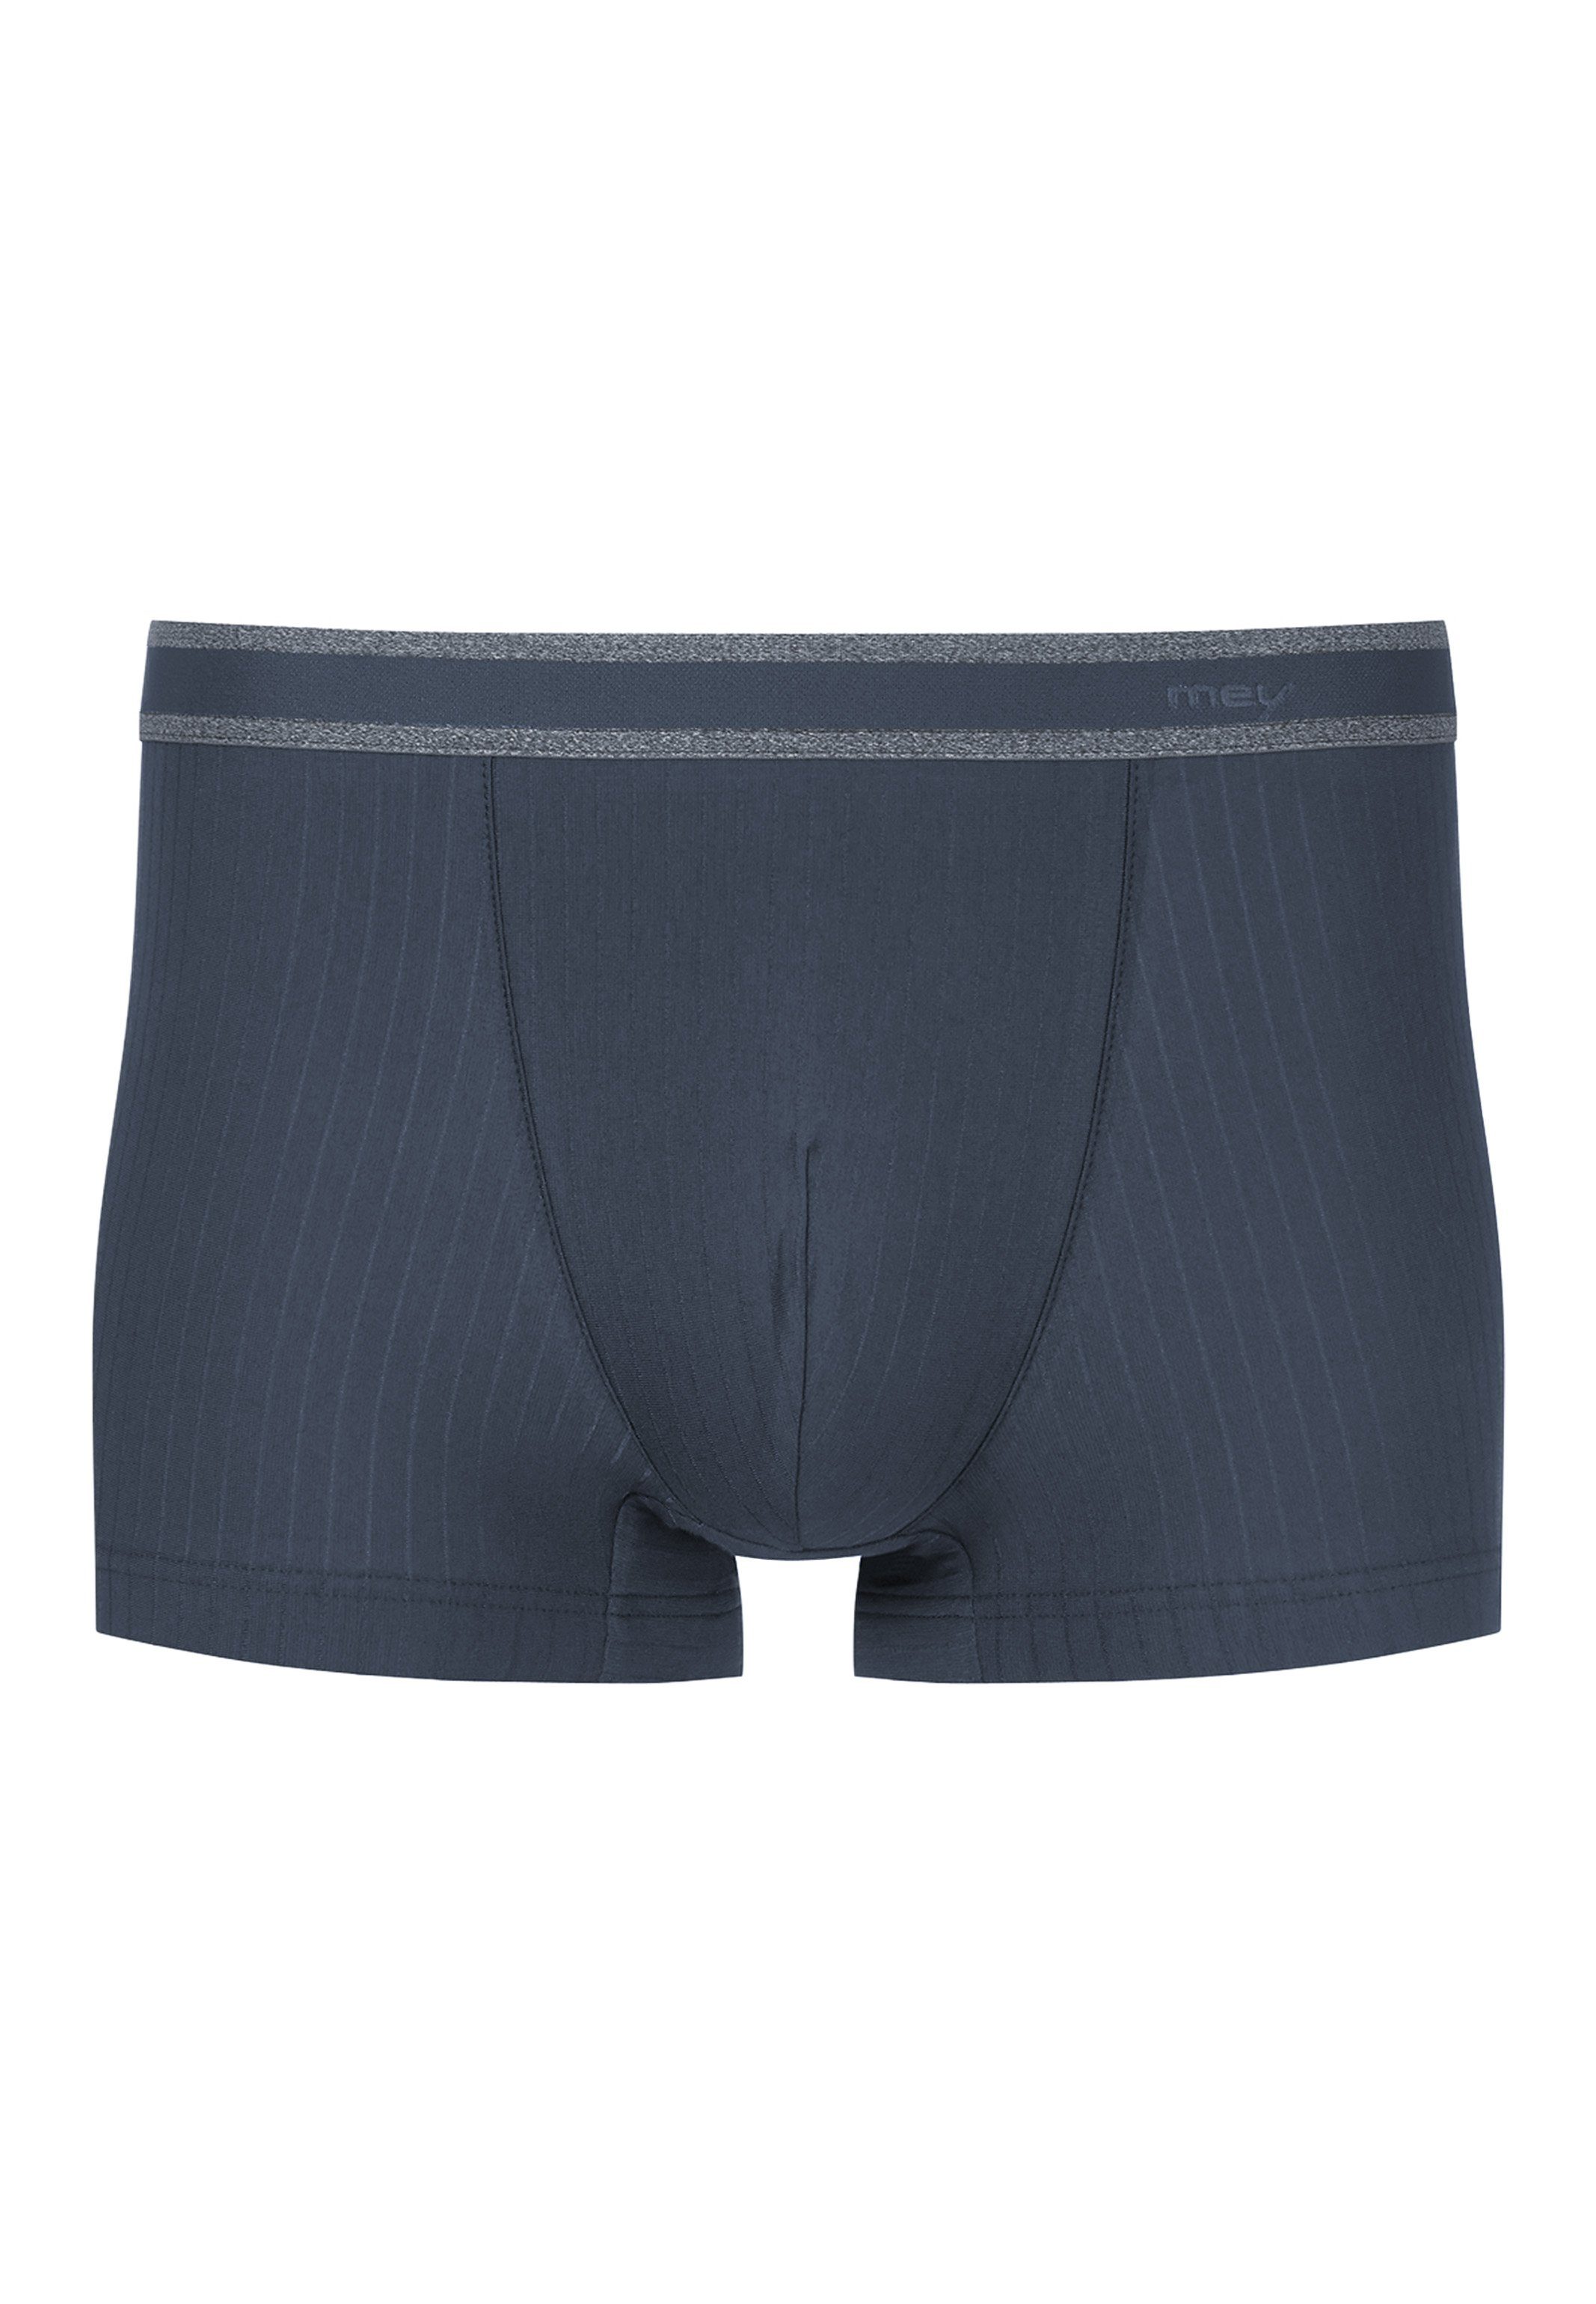 - Unlimited (1-St) grey Short Retro / Baumwolle Ohne Boxer Pant - - Eingriff Soft Mey Retro